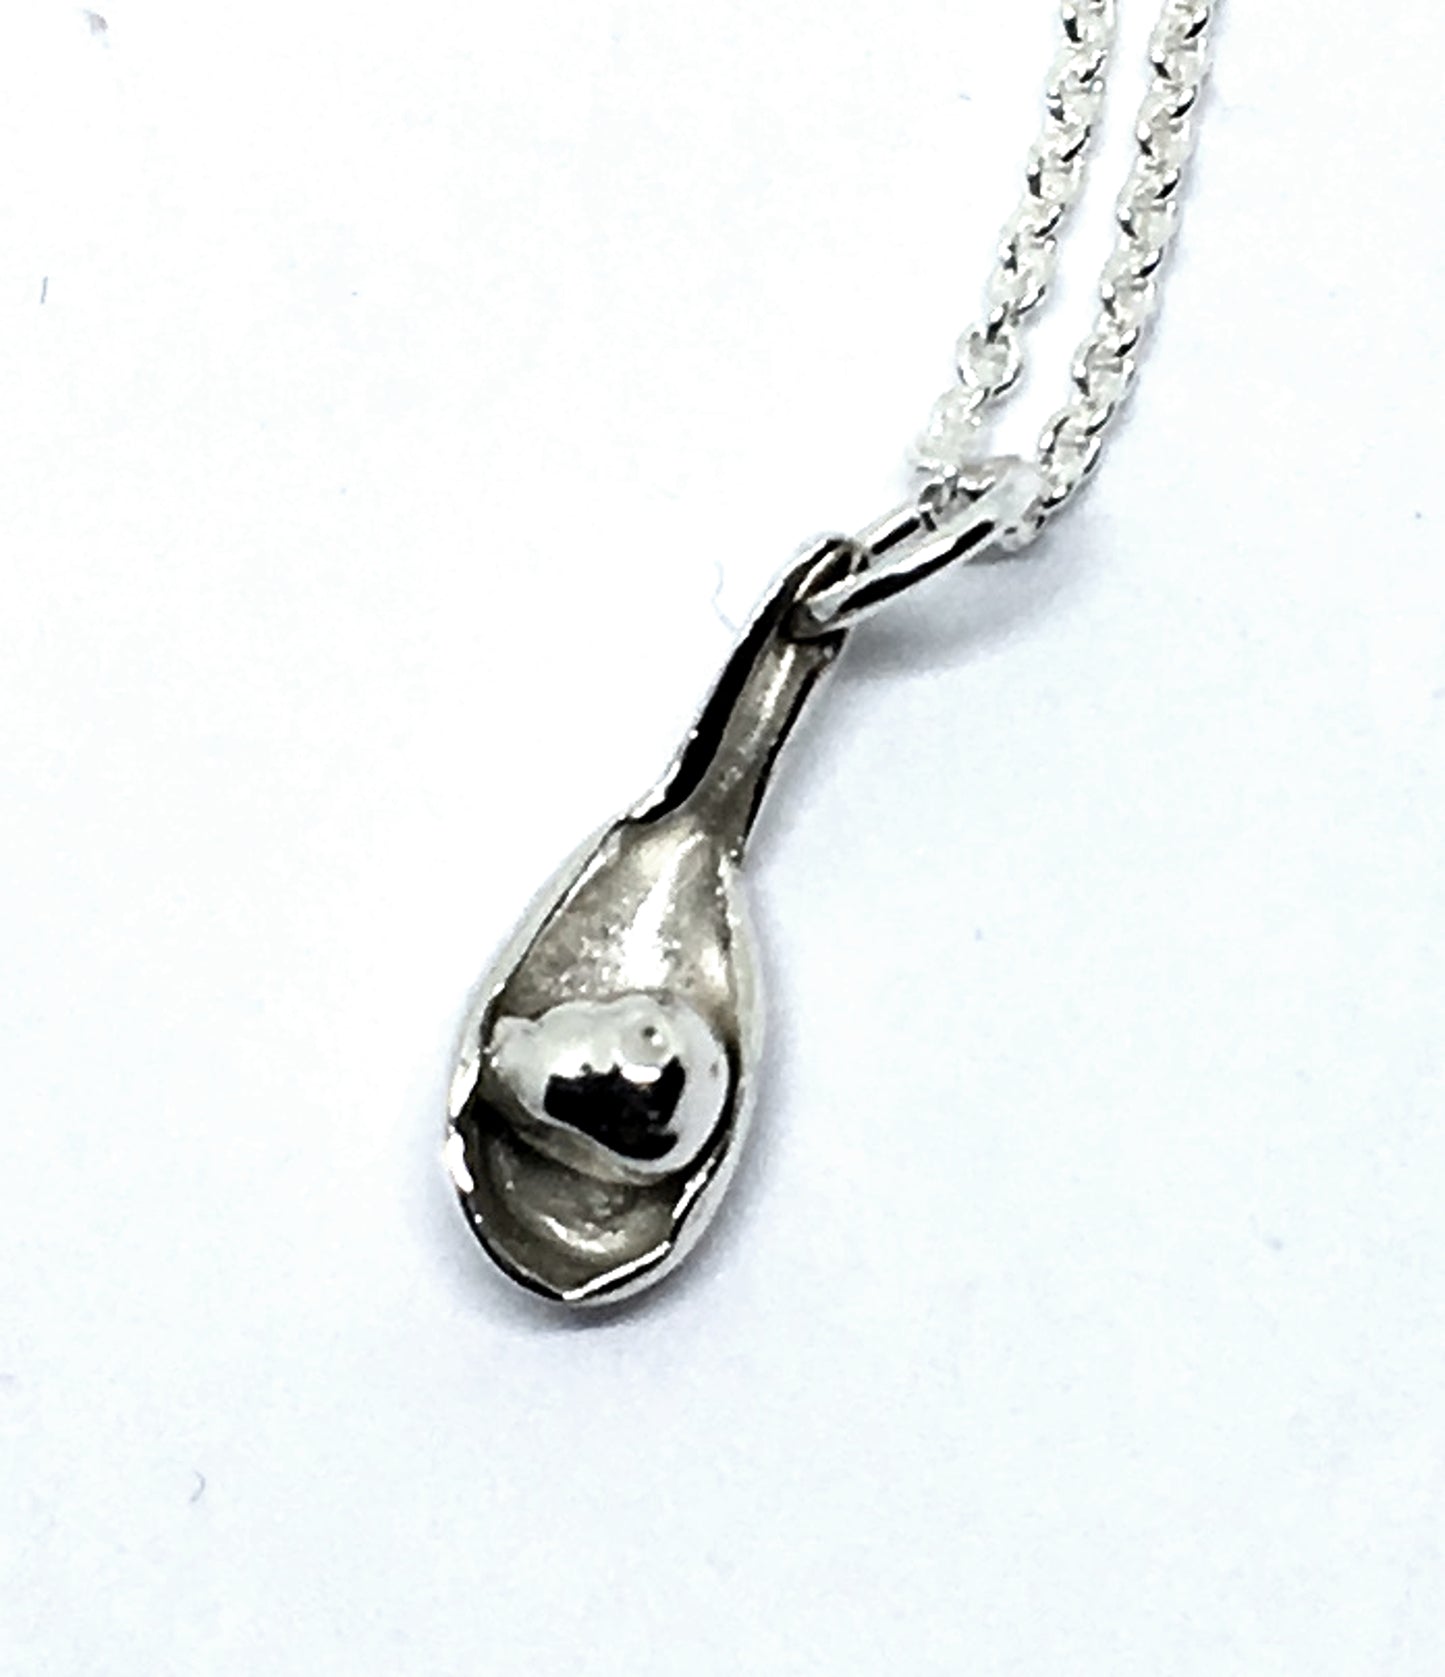 Dim Sum Soup Dumpling Charm Necklace in Sterling Silver